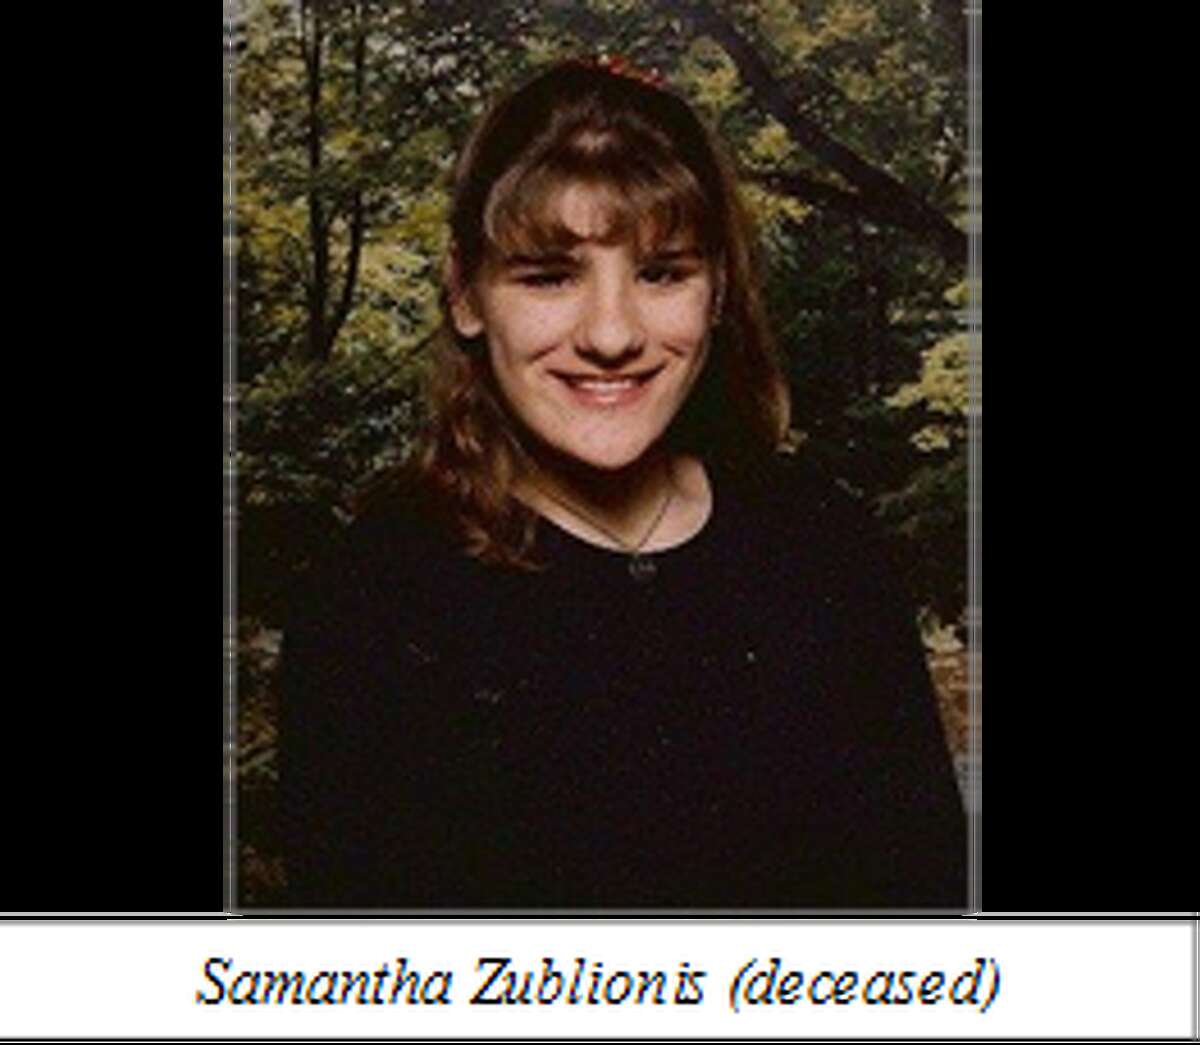 Samantha Zublonis, a San Antonio teen, was found dead in rural Frio County on Sept. 3, 1994.